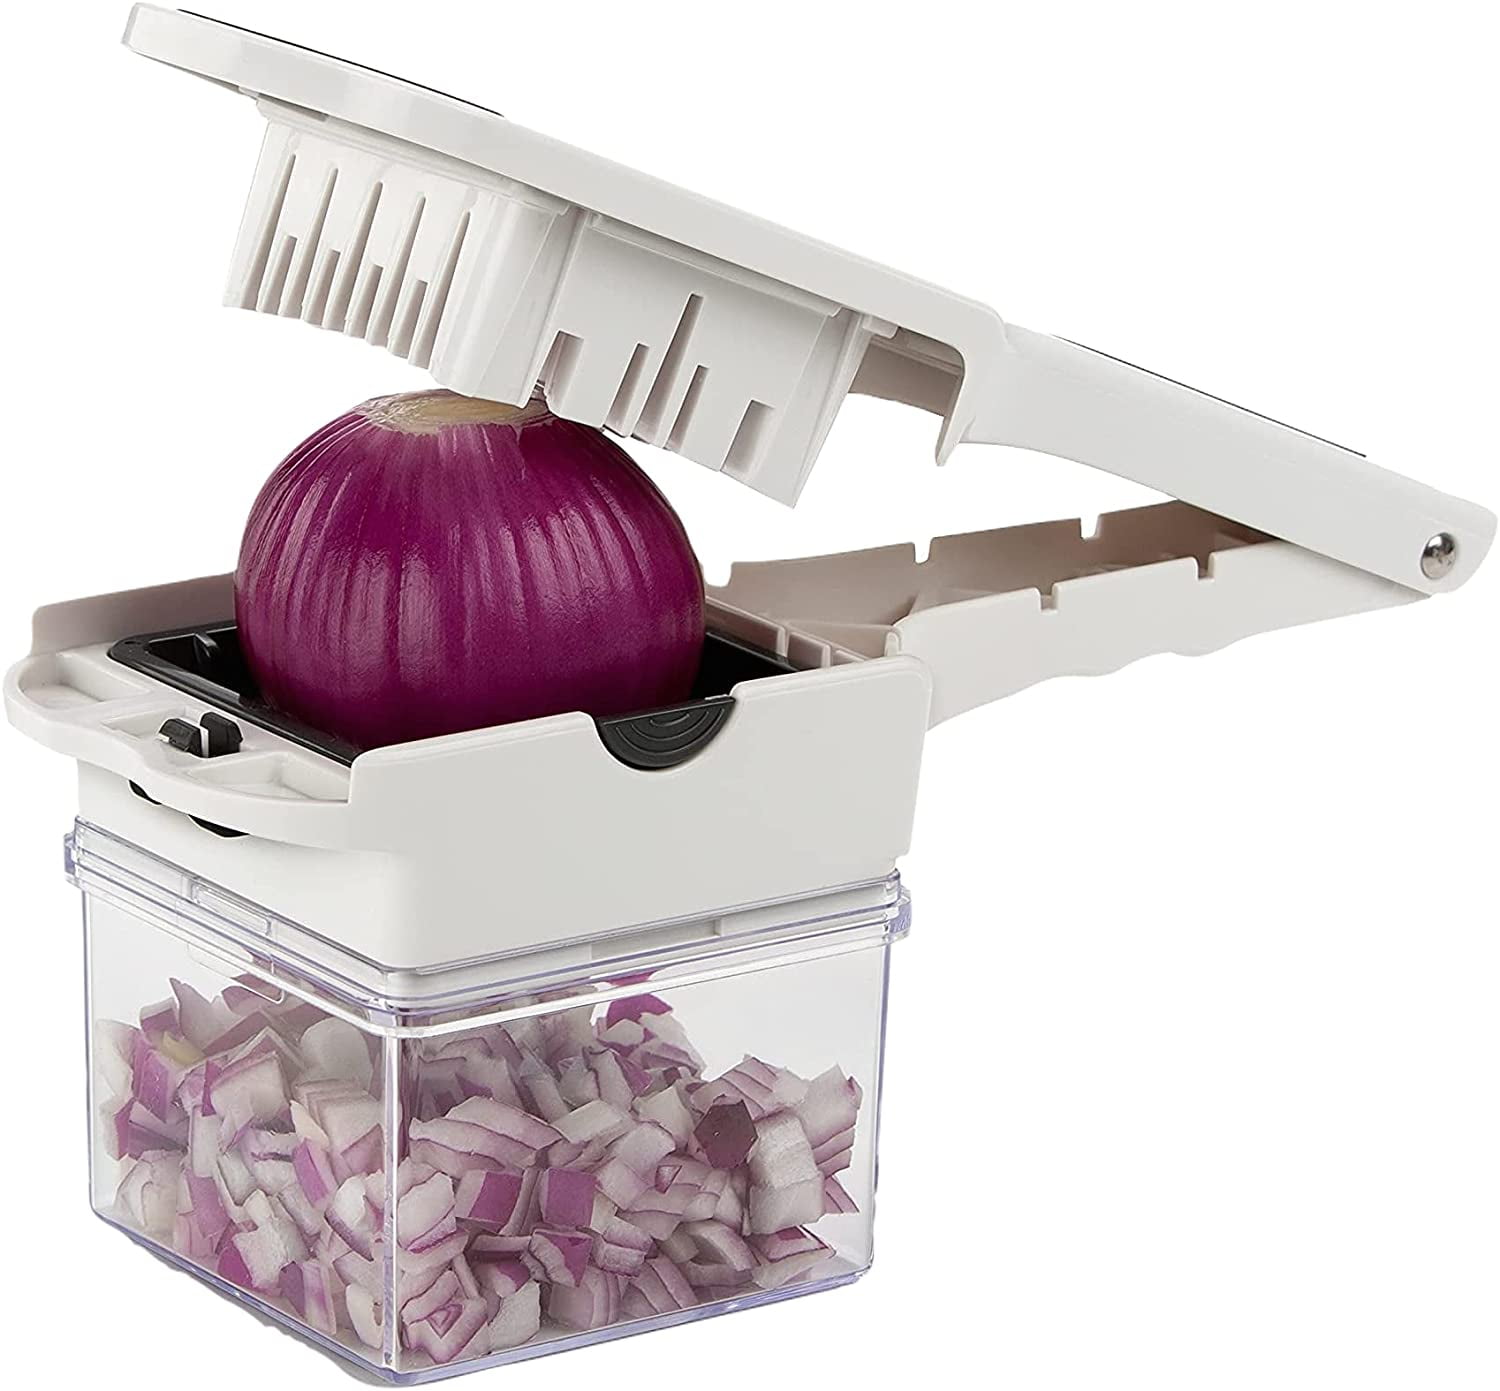 Mini Food Slicer - Gadget Scoops